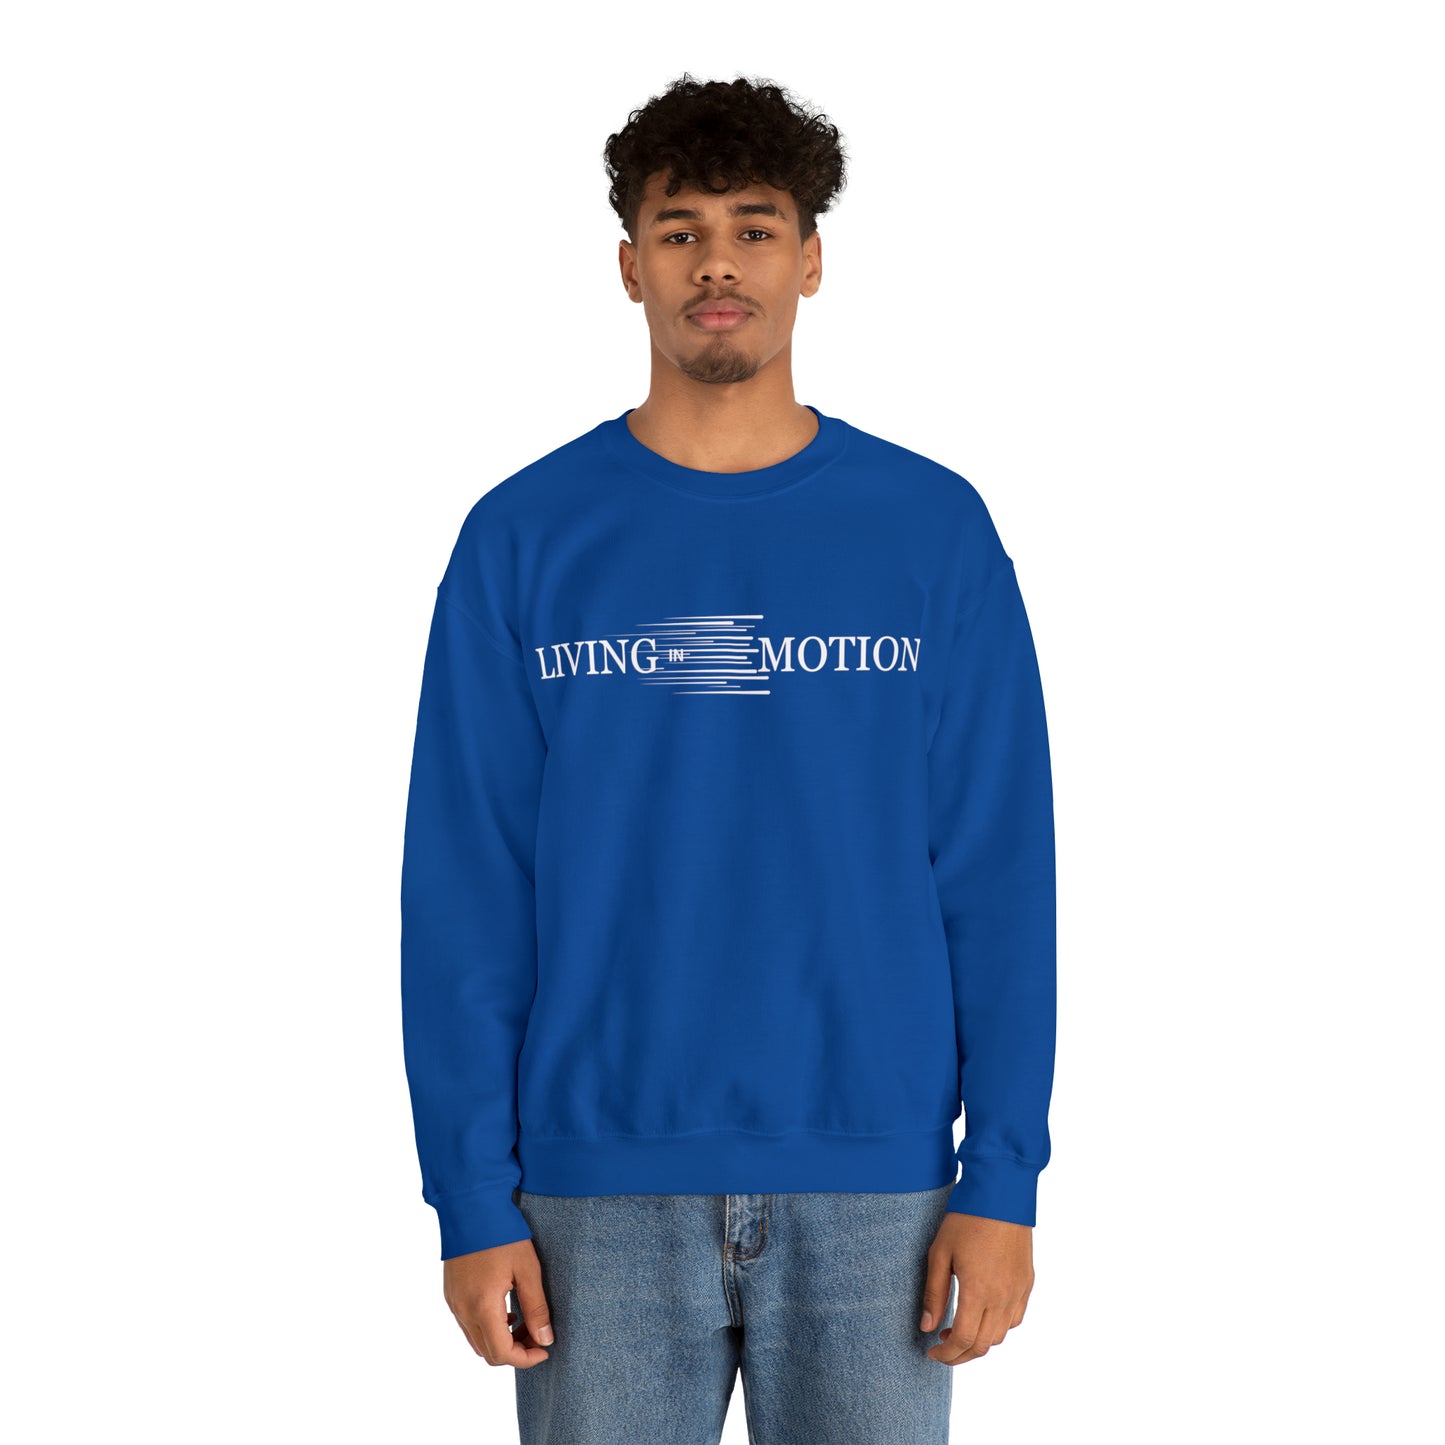 Unisex Heavy Blend™ Crewneck Sweatshirt - Living in motion